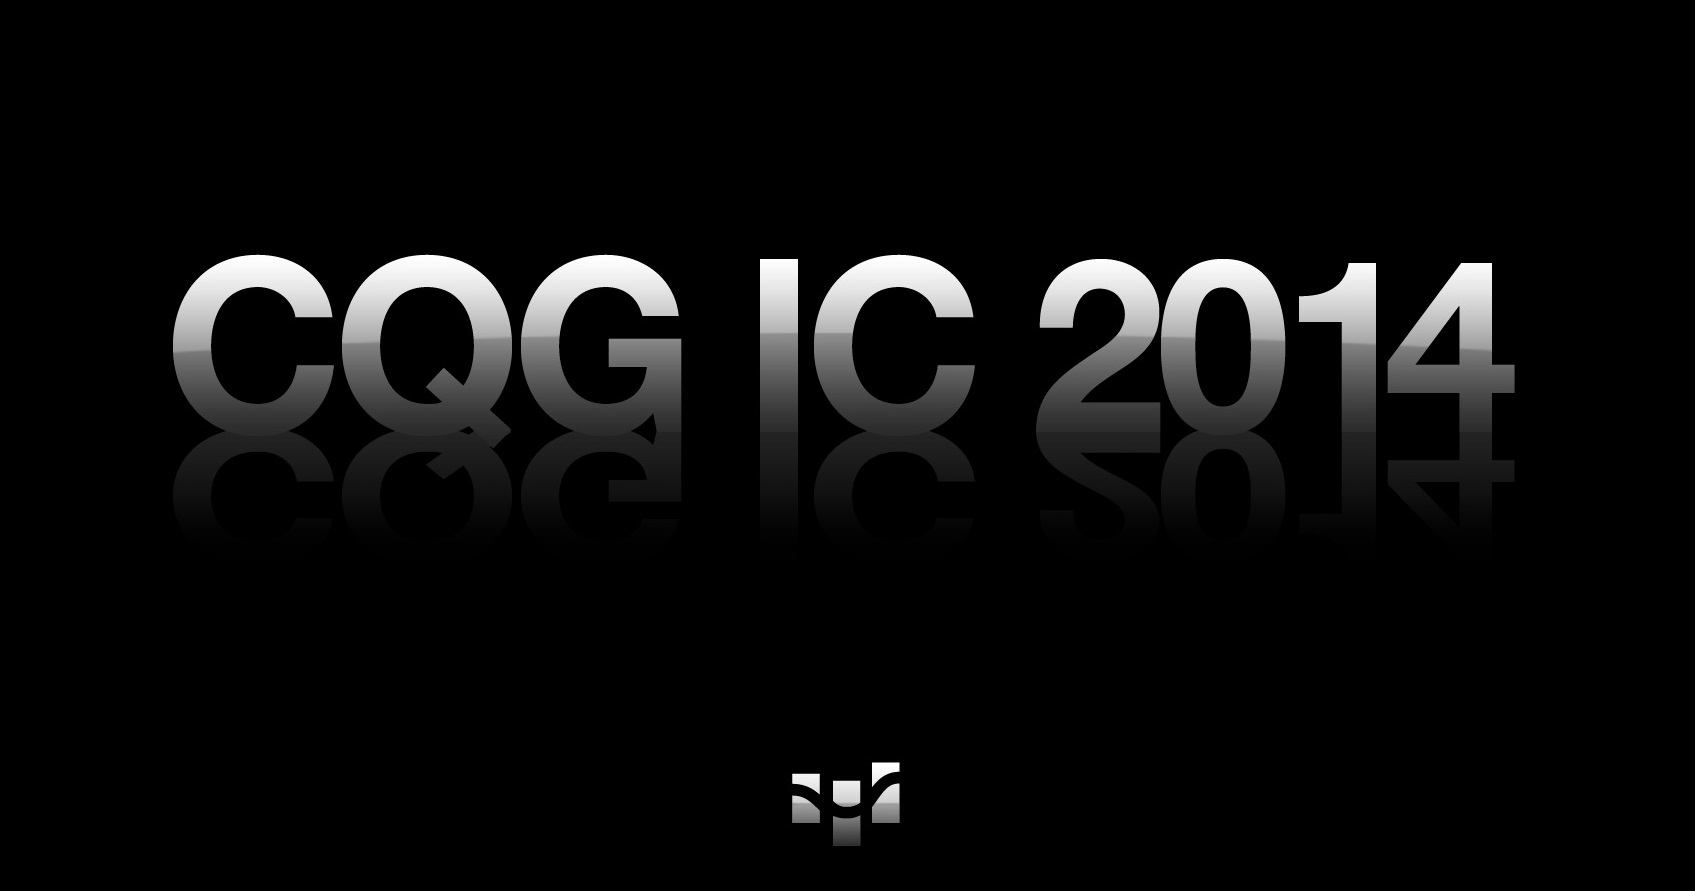 CQG_IC_2014-Black.jpg